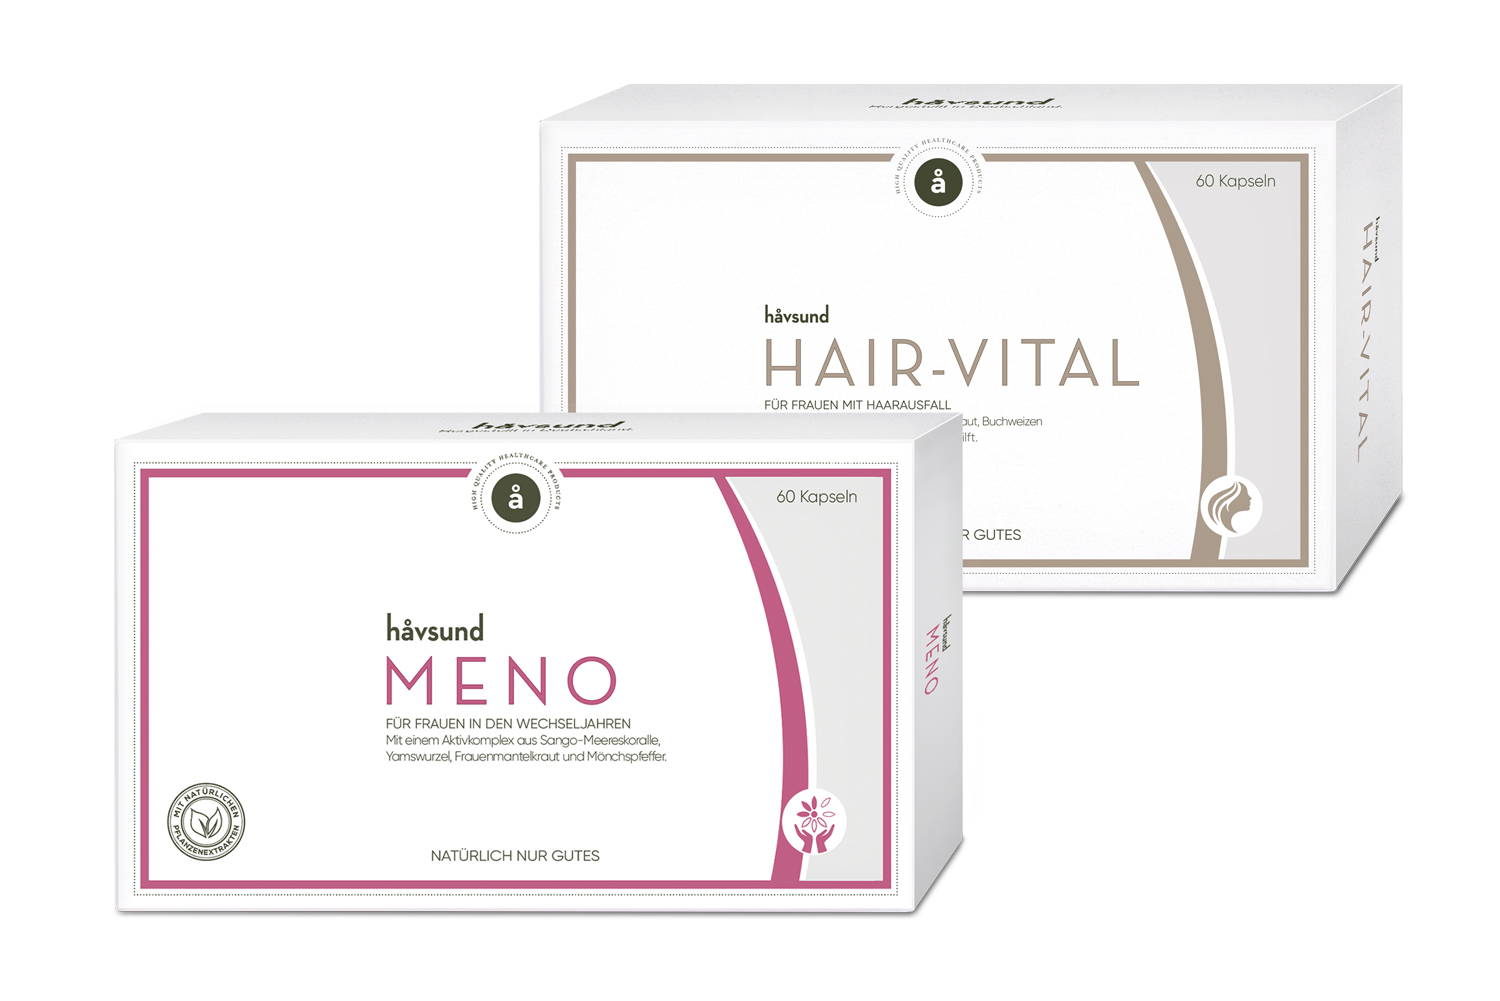 håvsund Meno & Hair-Vital product image